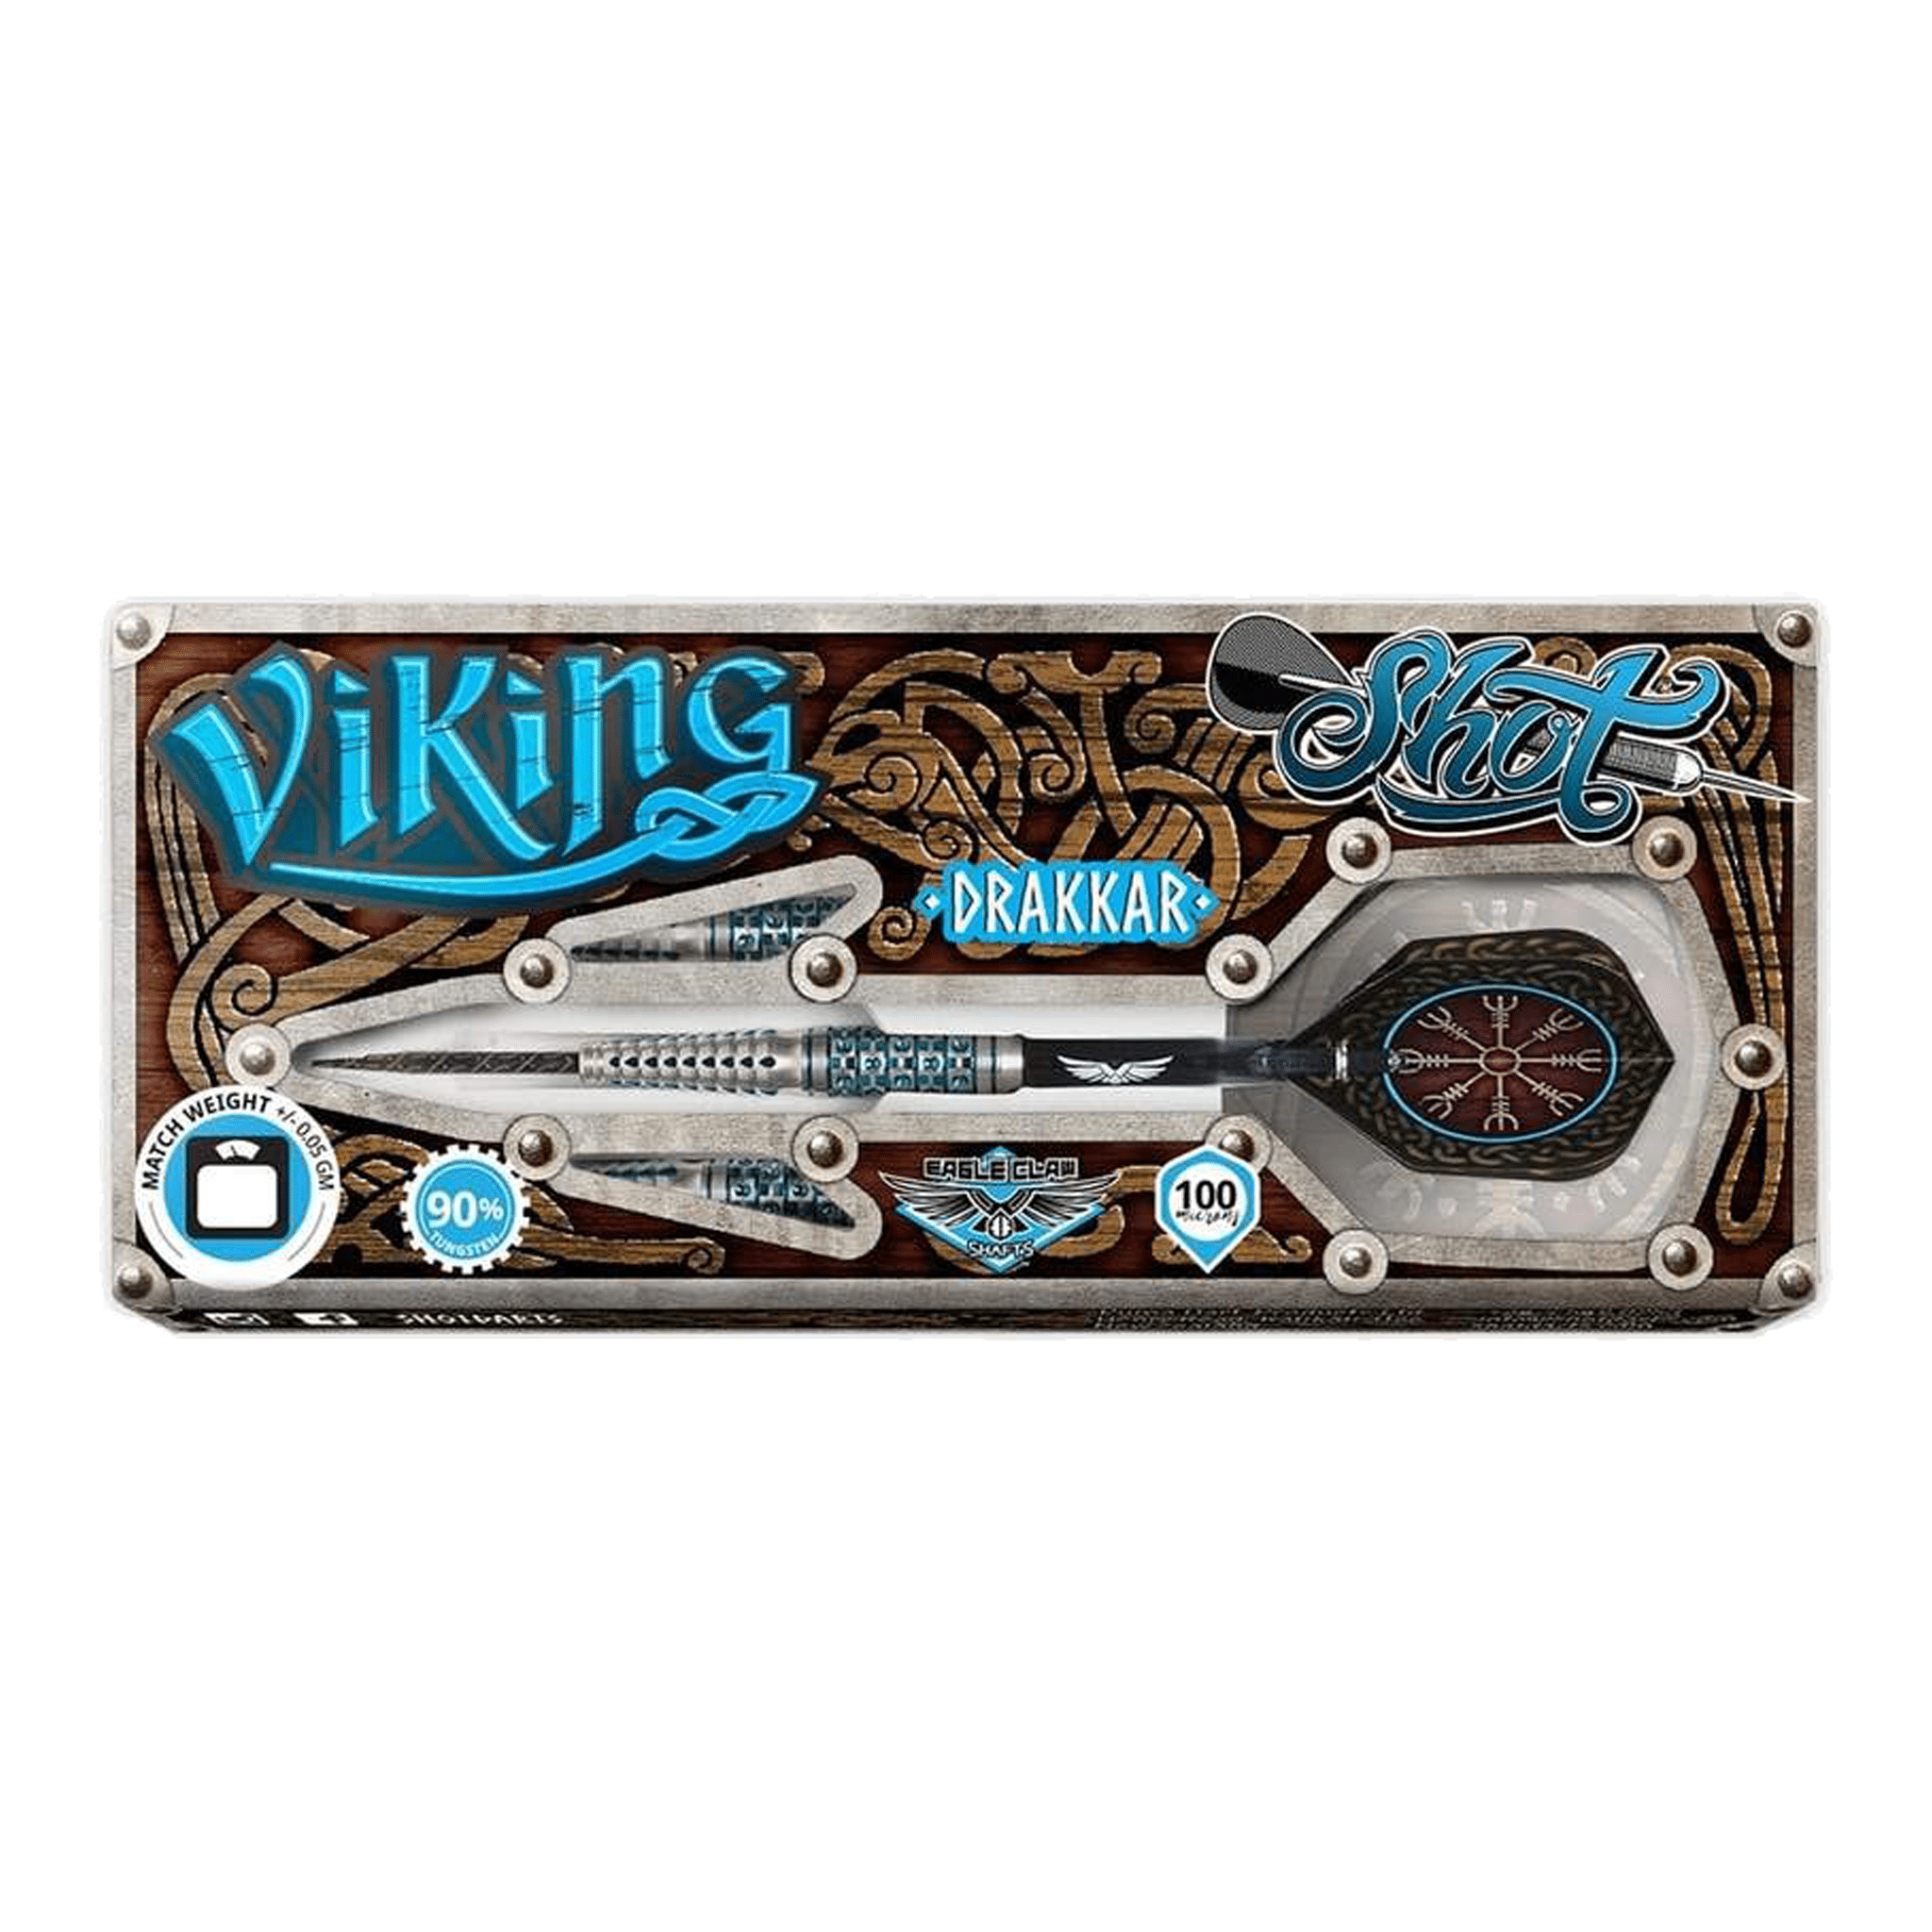 Shot Viking Drakkar Steel Tip Darts - 90% Tungsten - 23 Grams Darts